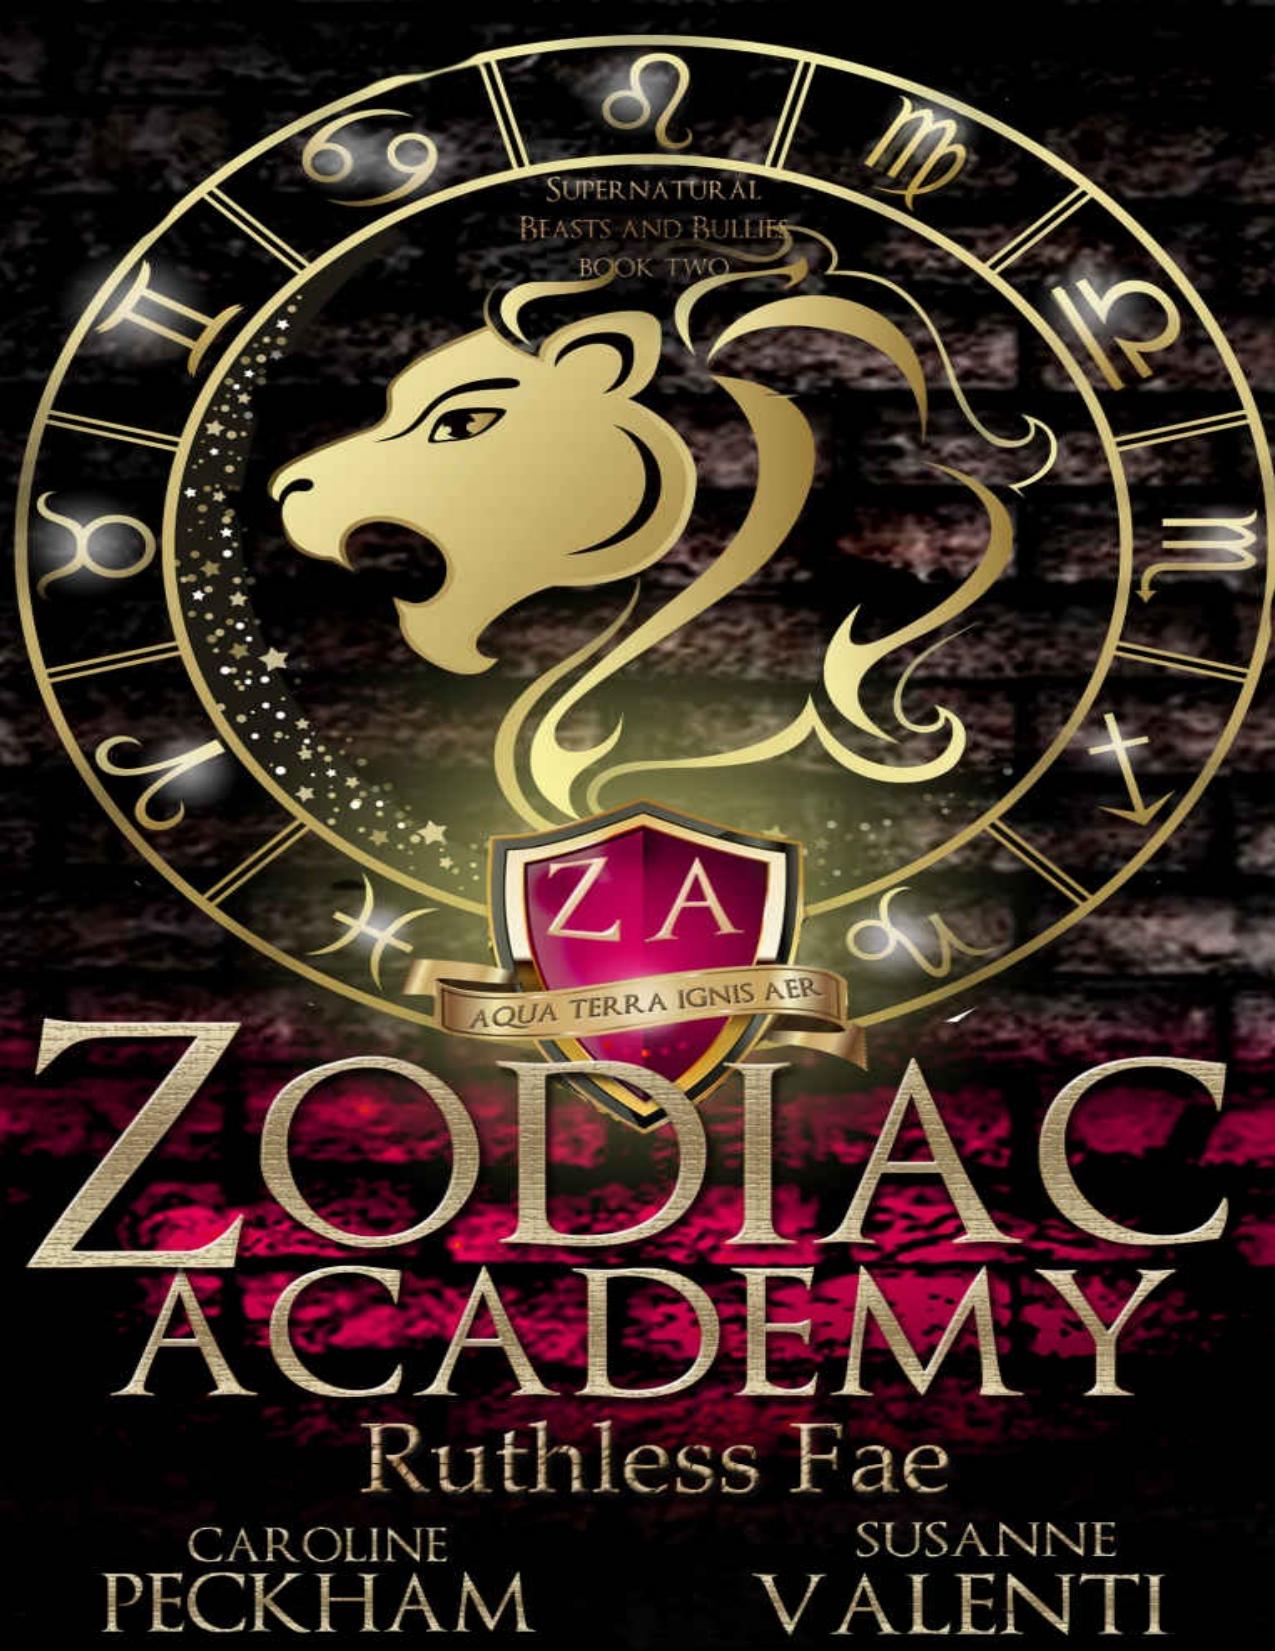 Zodiac Academy 2: Ruthless Fae: An Academy Bully Romance by Caroline Peckham & Susanne Valenti